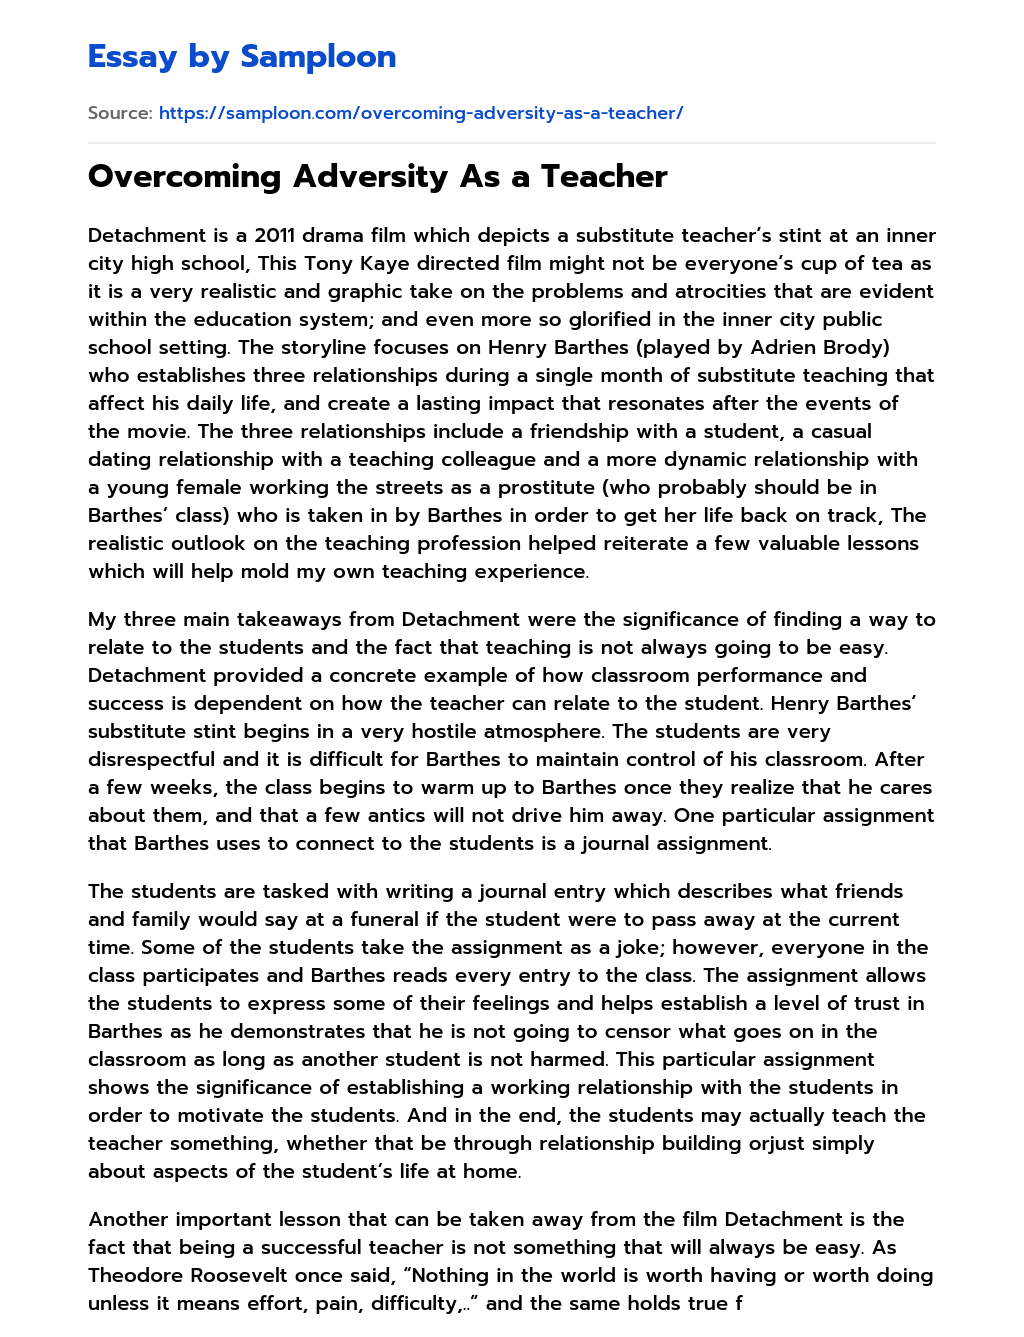 Overcoming Adversity As a Teacher essay